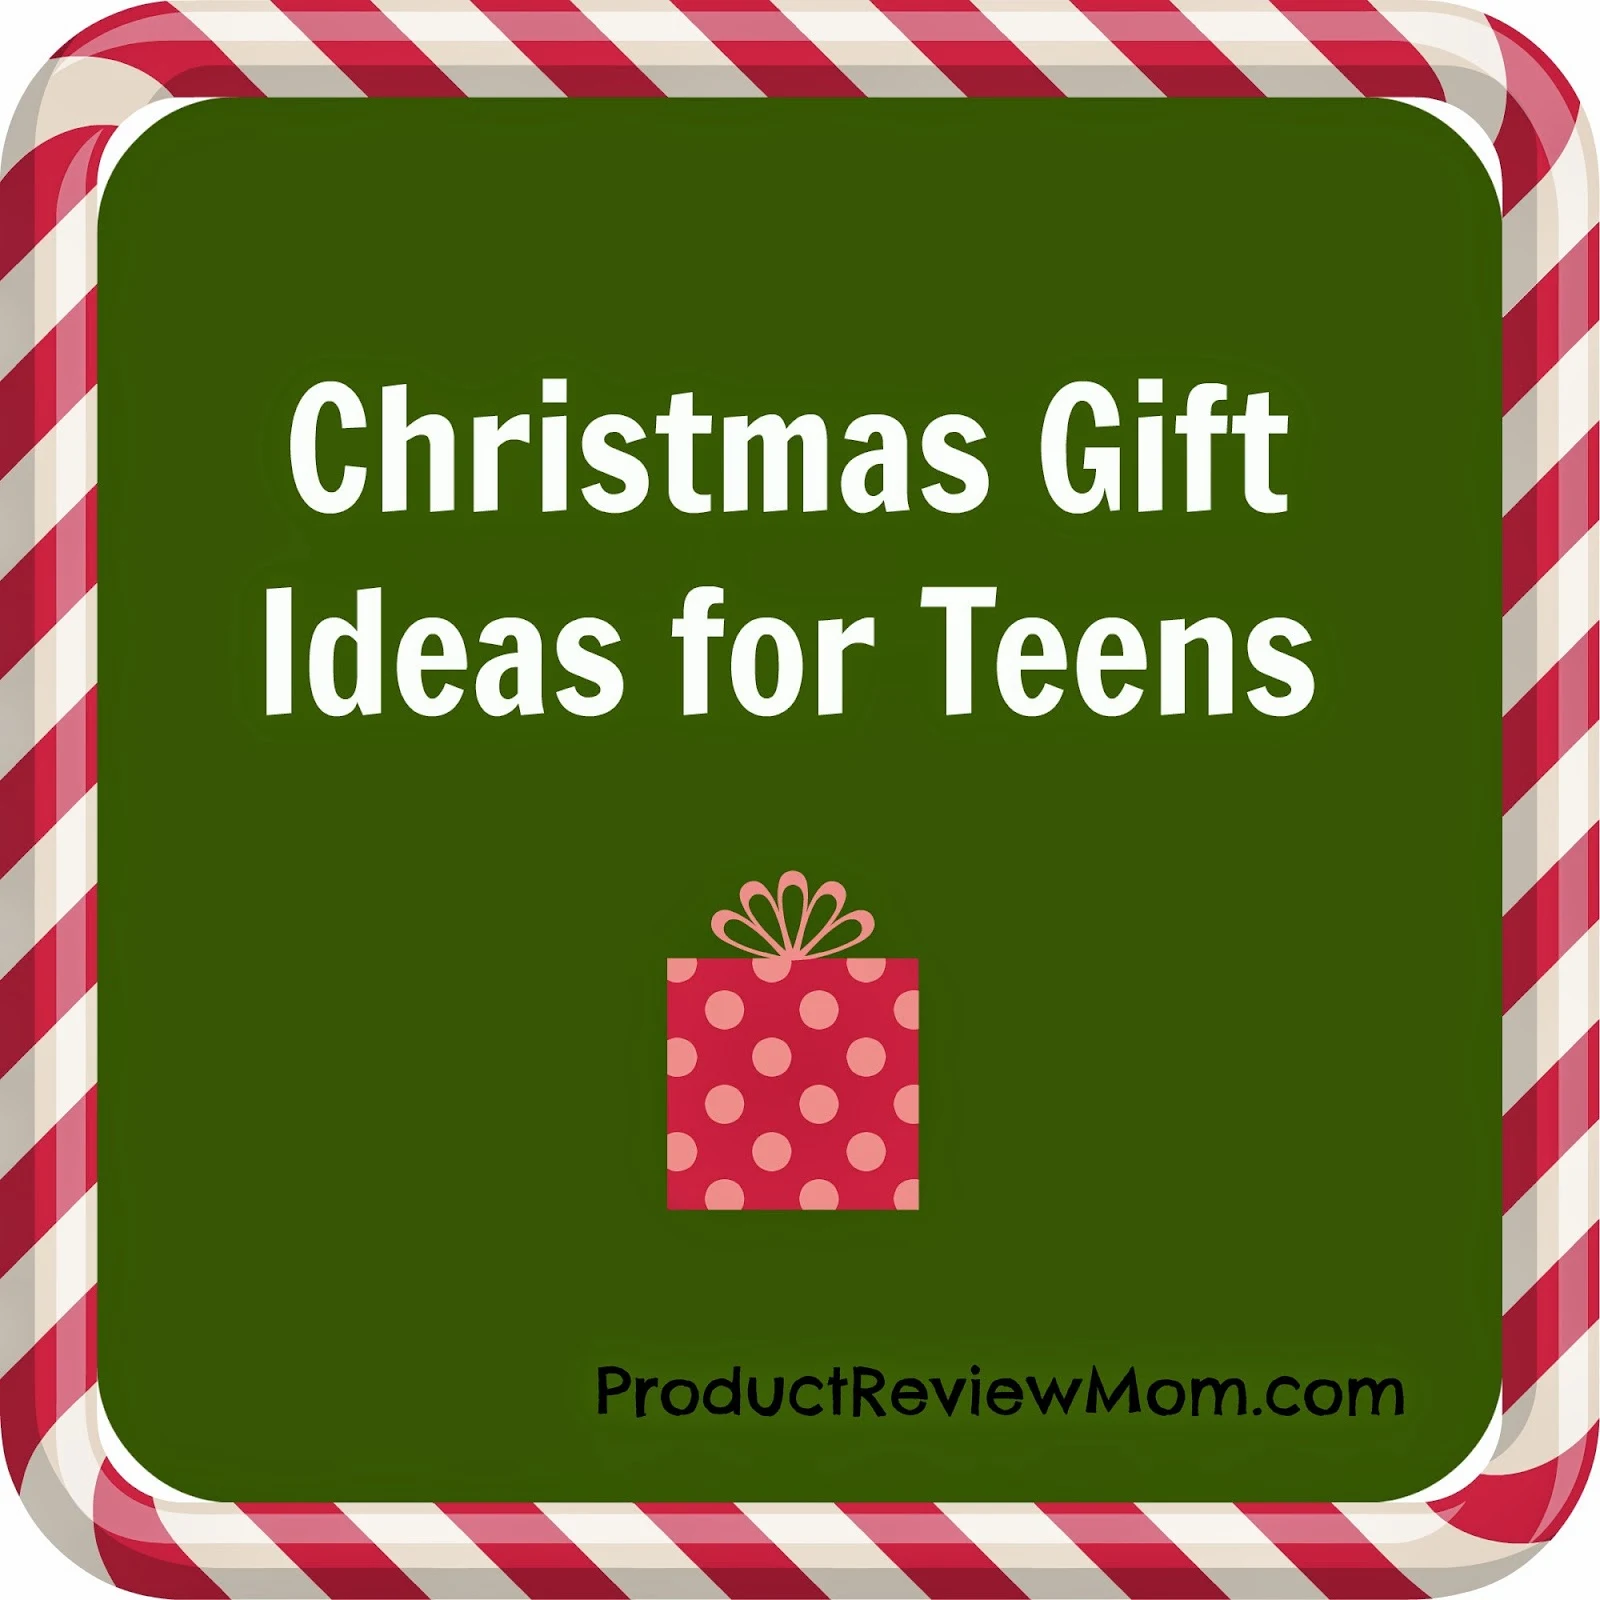 Christmas Gift Ideas for Teens #HolidayGiftGuide via www.Productreviewmom.com